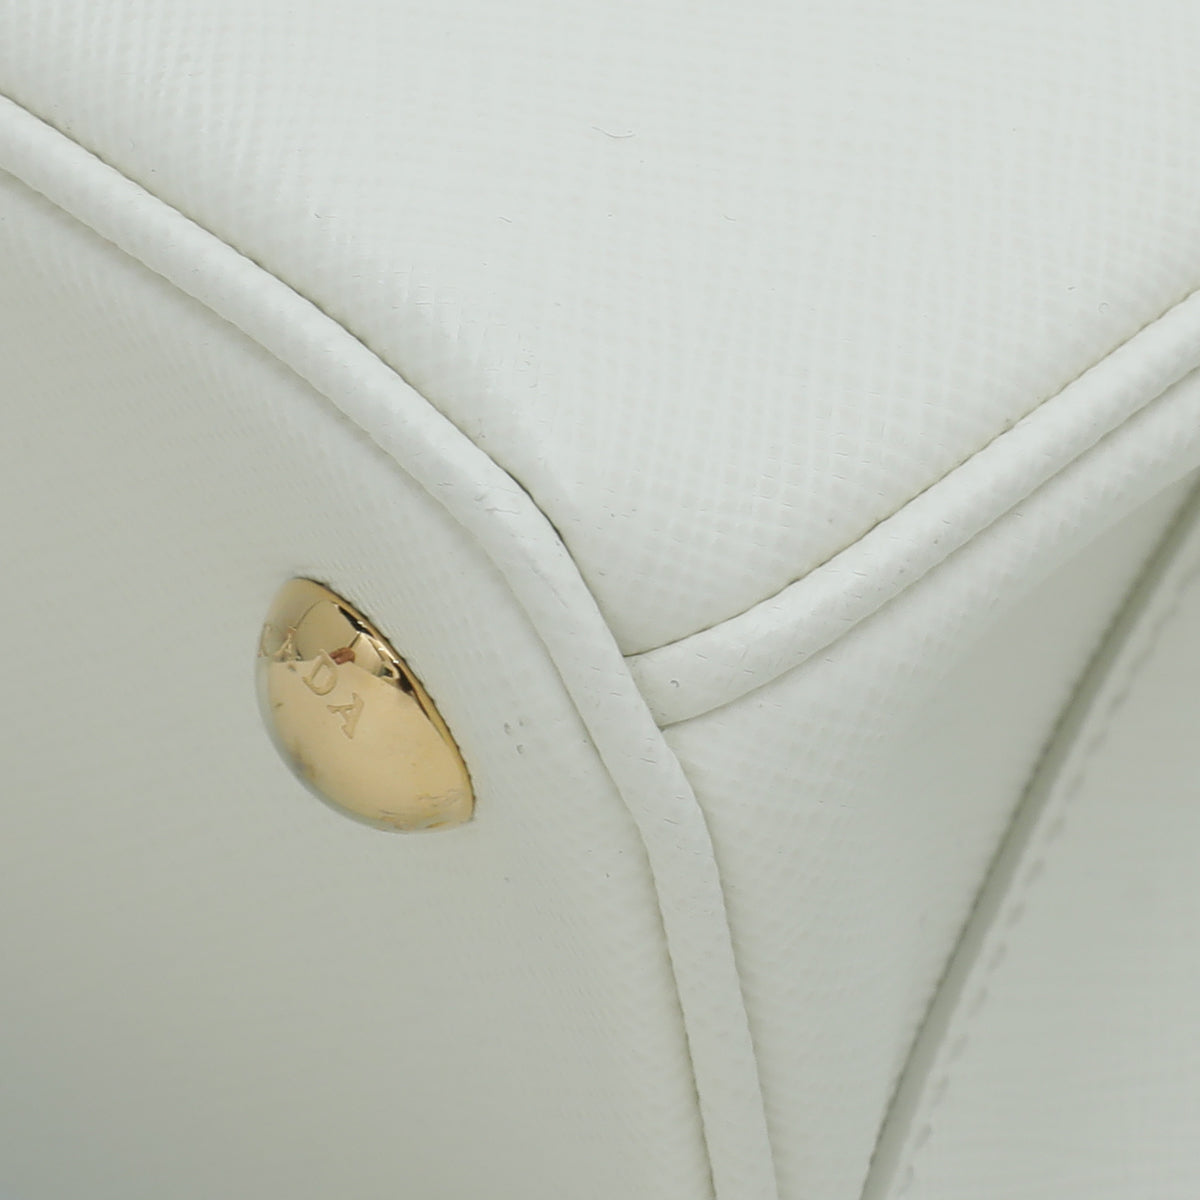 Prada White Galleria Mini Bag